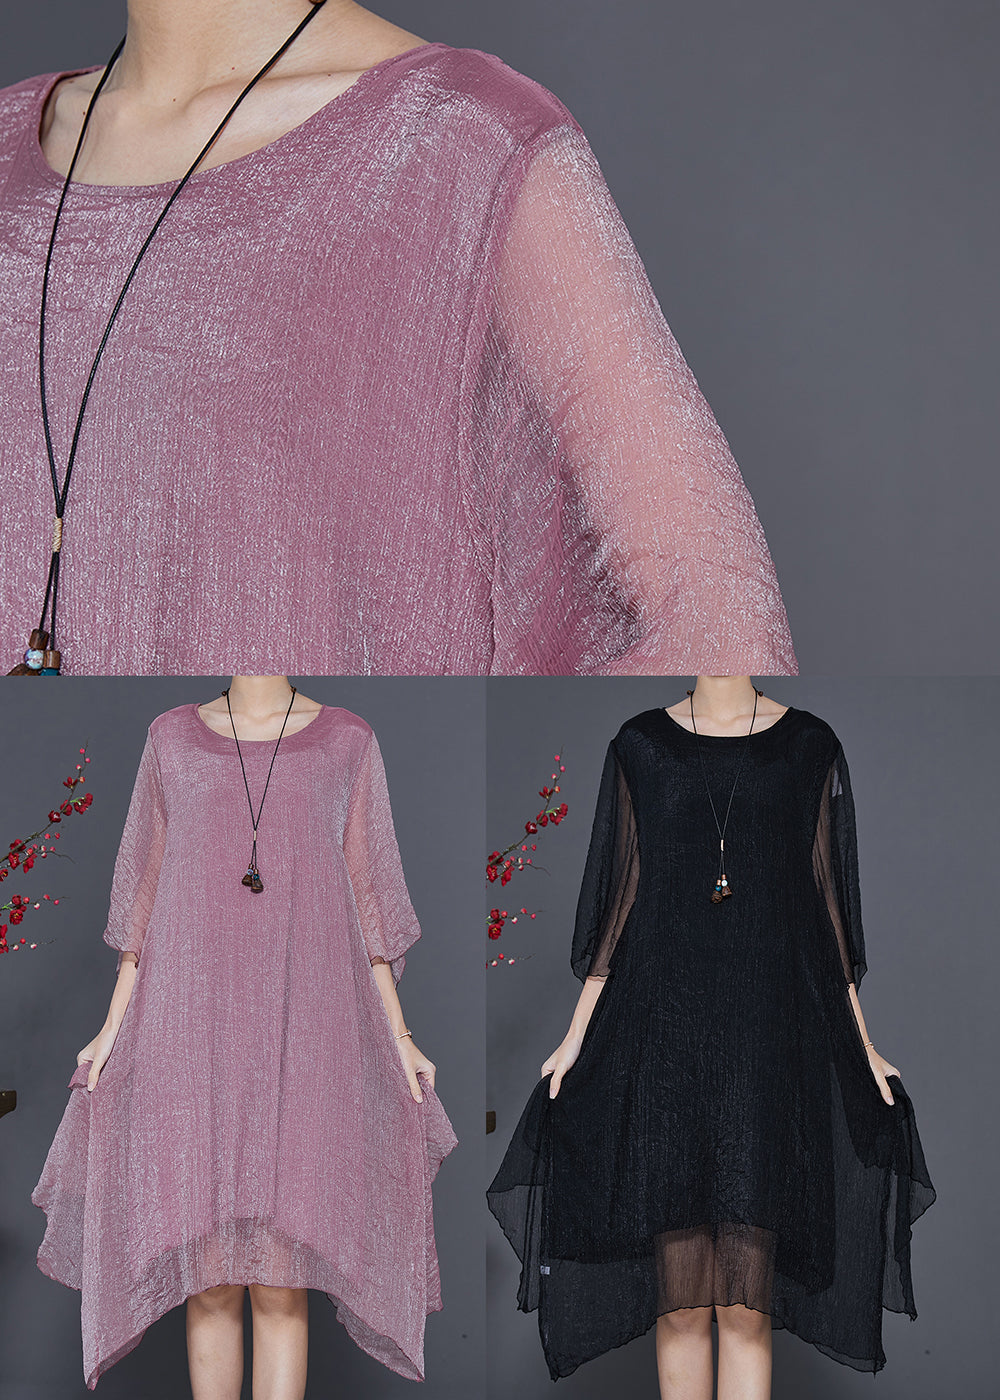 Organic Purple Asymmetrical Design Silk Maxi Dresses Summer